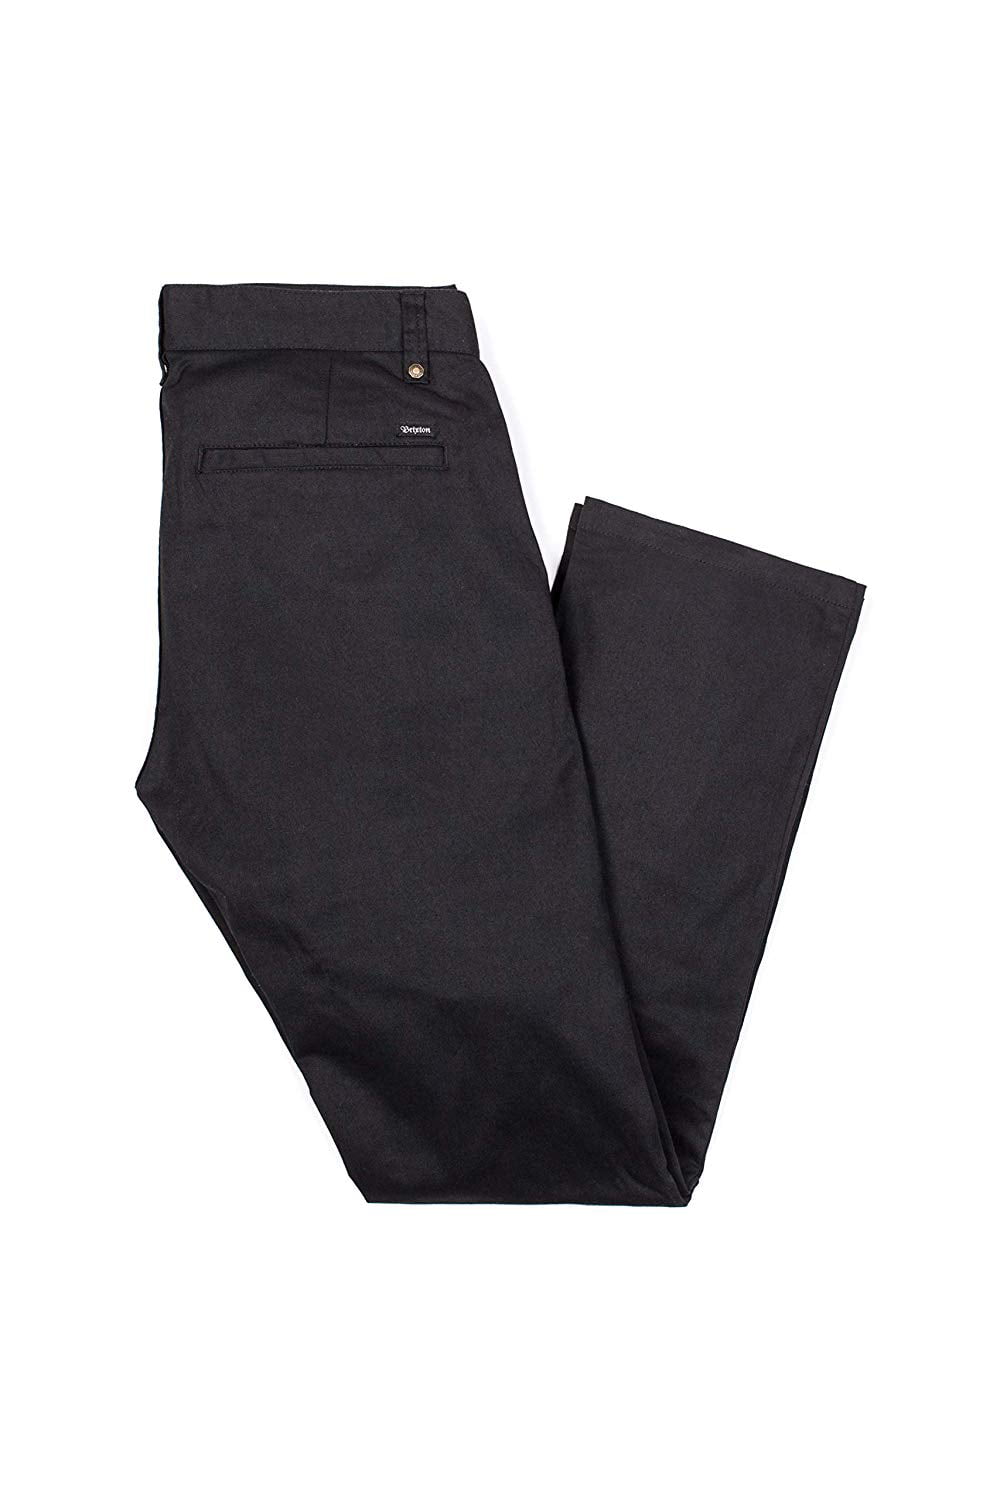 Brixton Men's Reserve Standard Fit Chino Pants Pants, Black, 32 ...